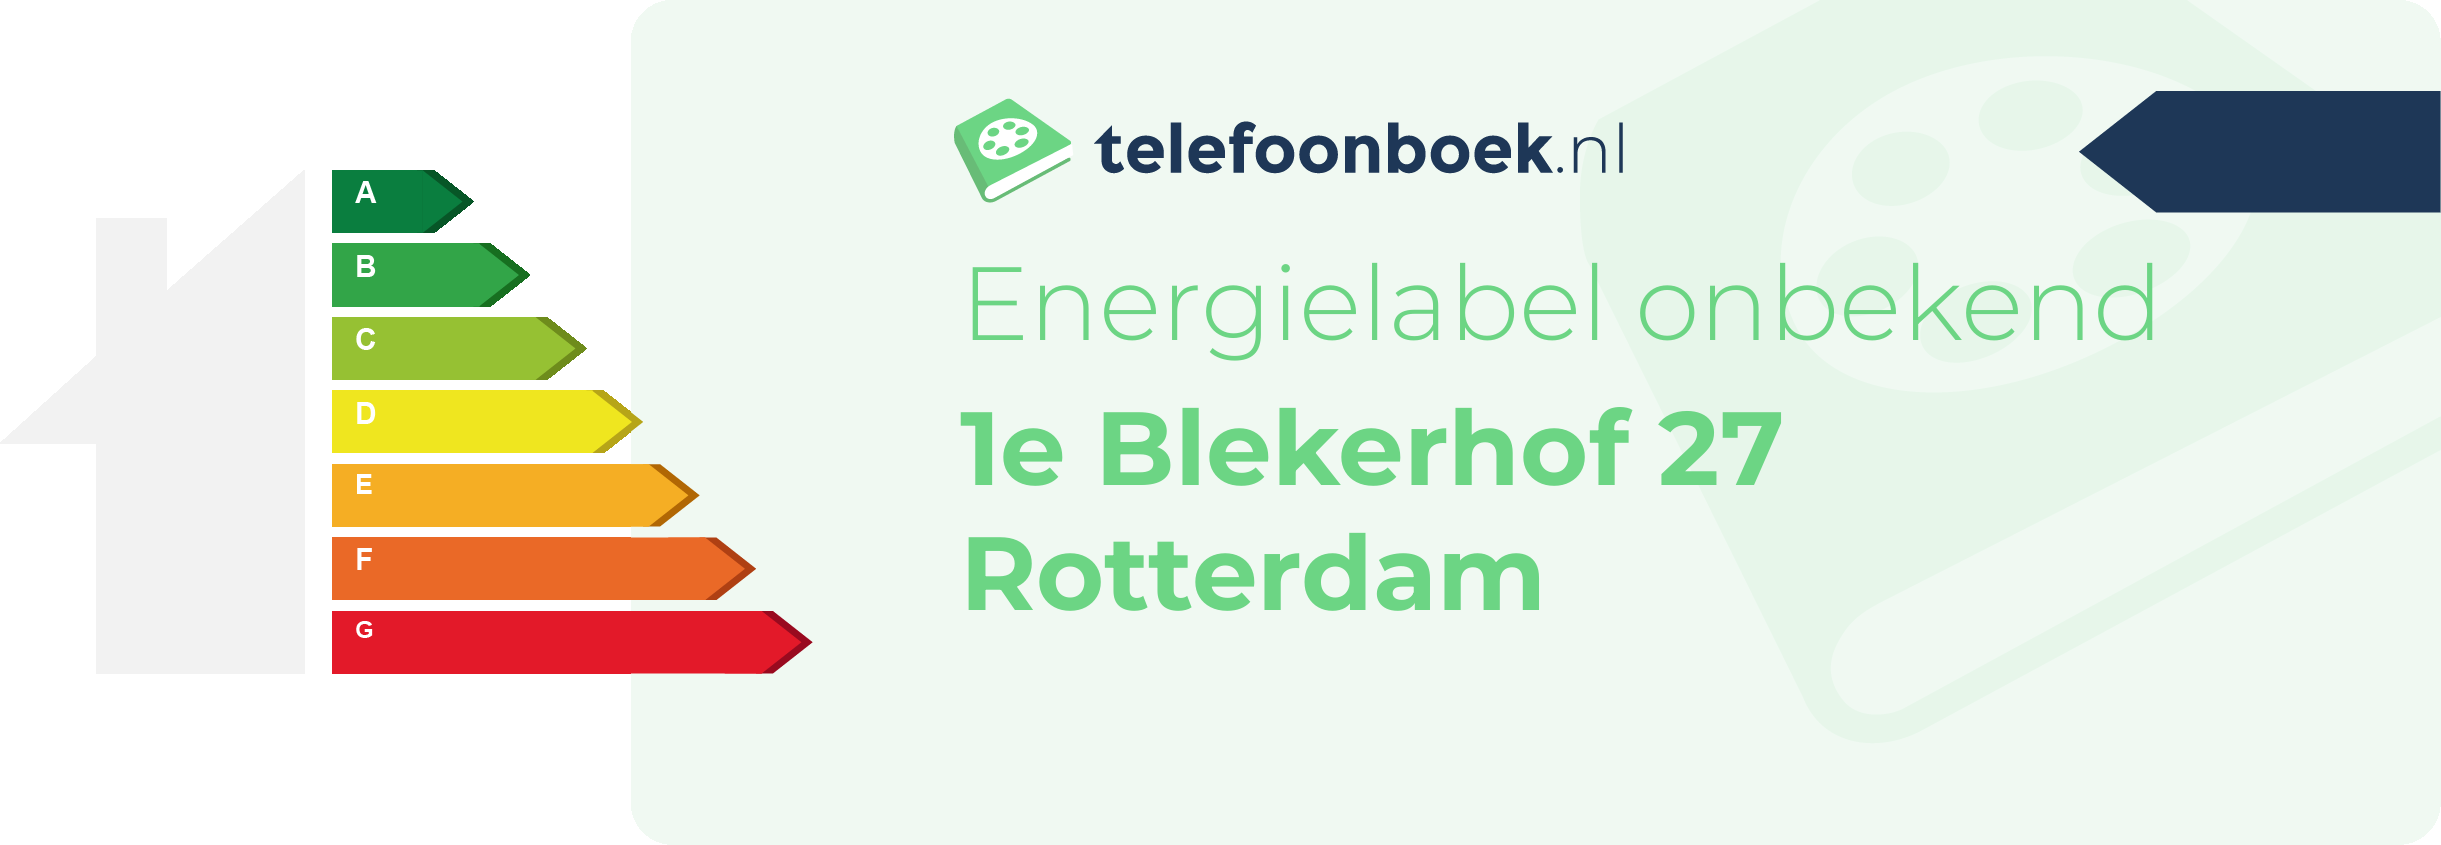 Energielabel 1e Blekerhof 27 Rotterdam